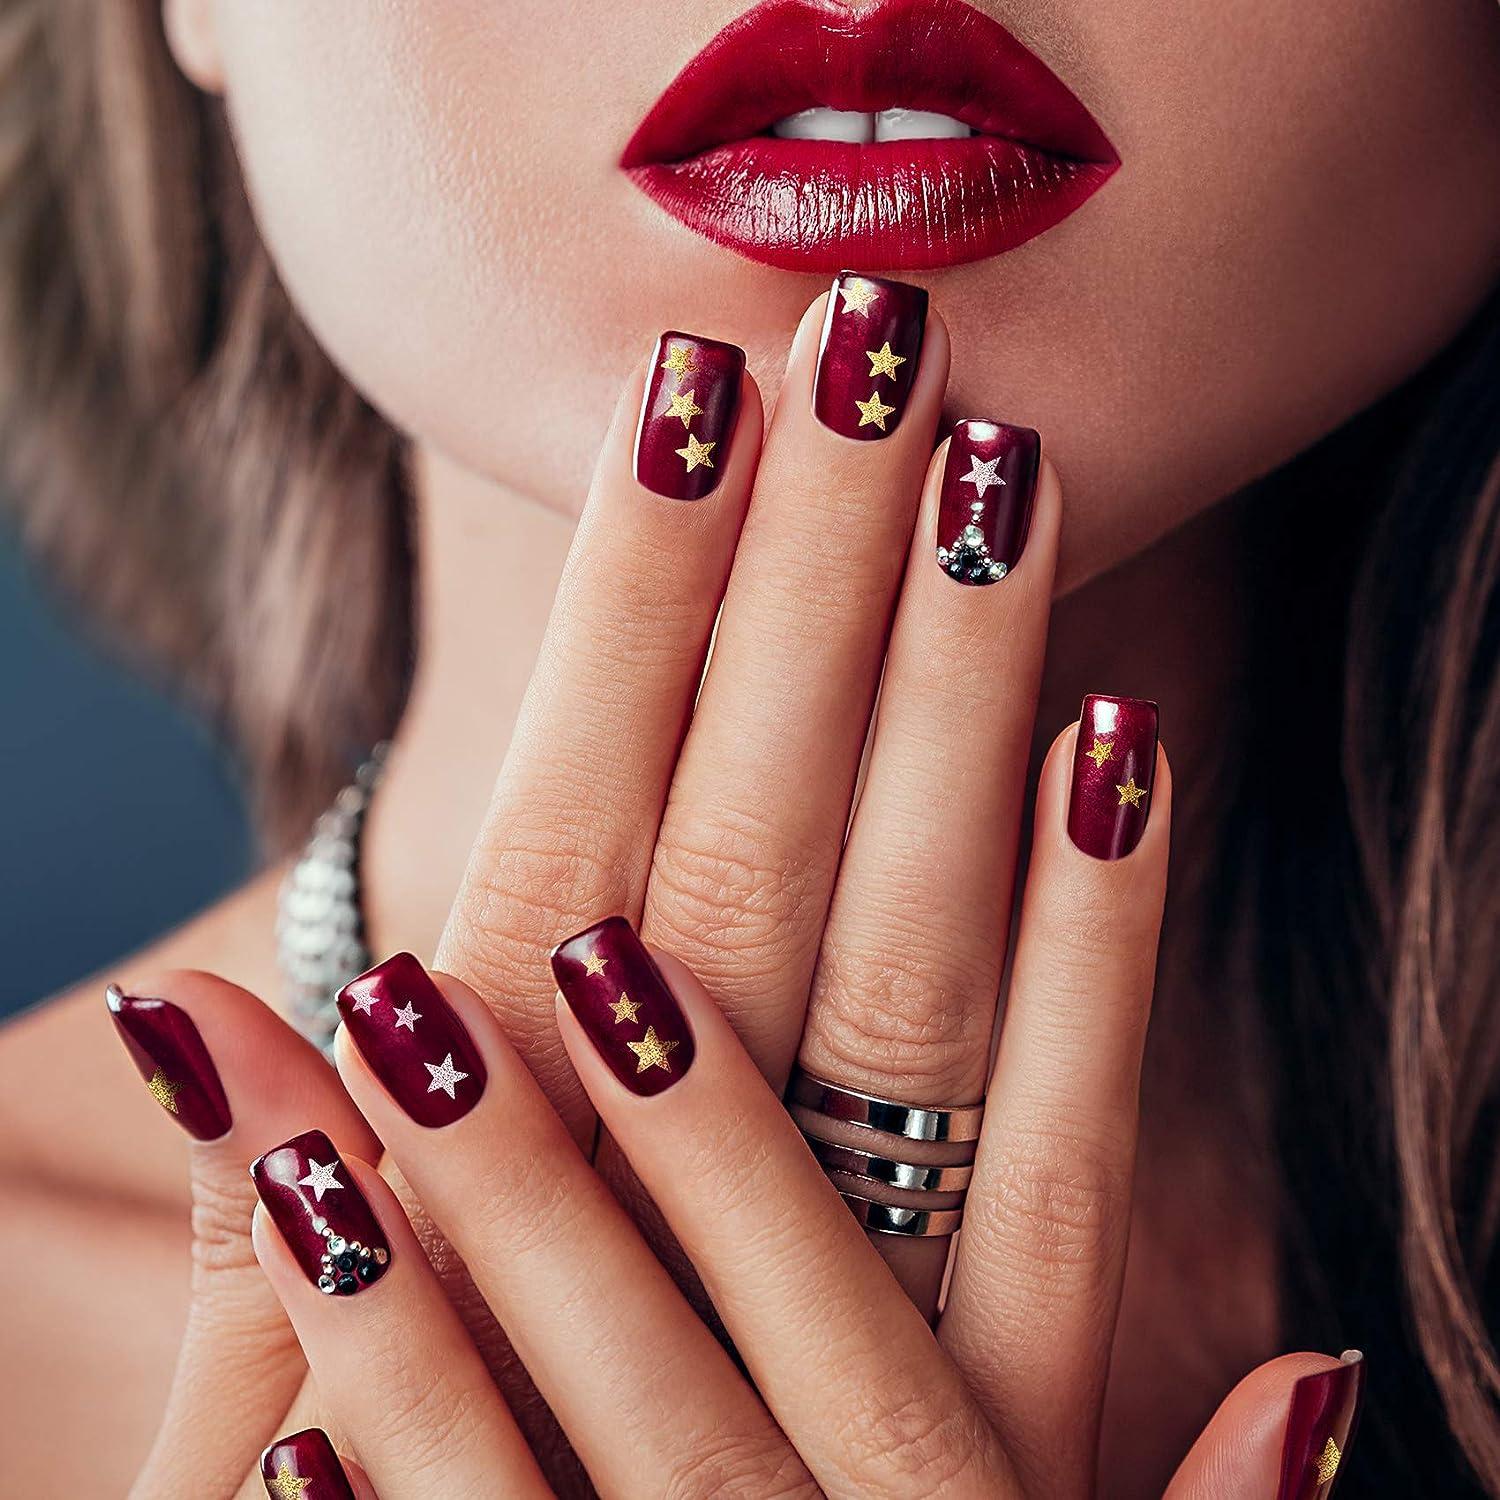 25 Beautiful Star Nails To Do - The Glossychic | Pretty acrylic nails, Nail  art, Nails inspiration